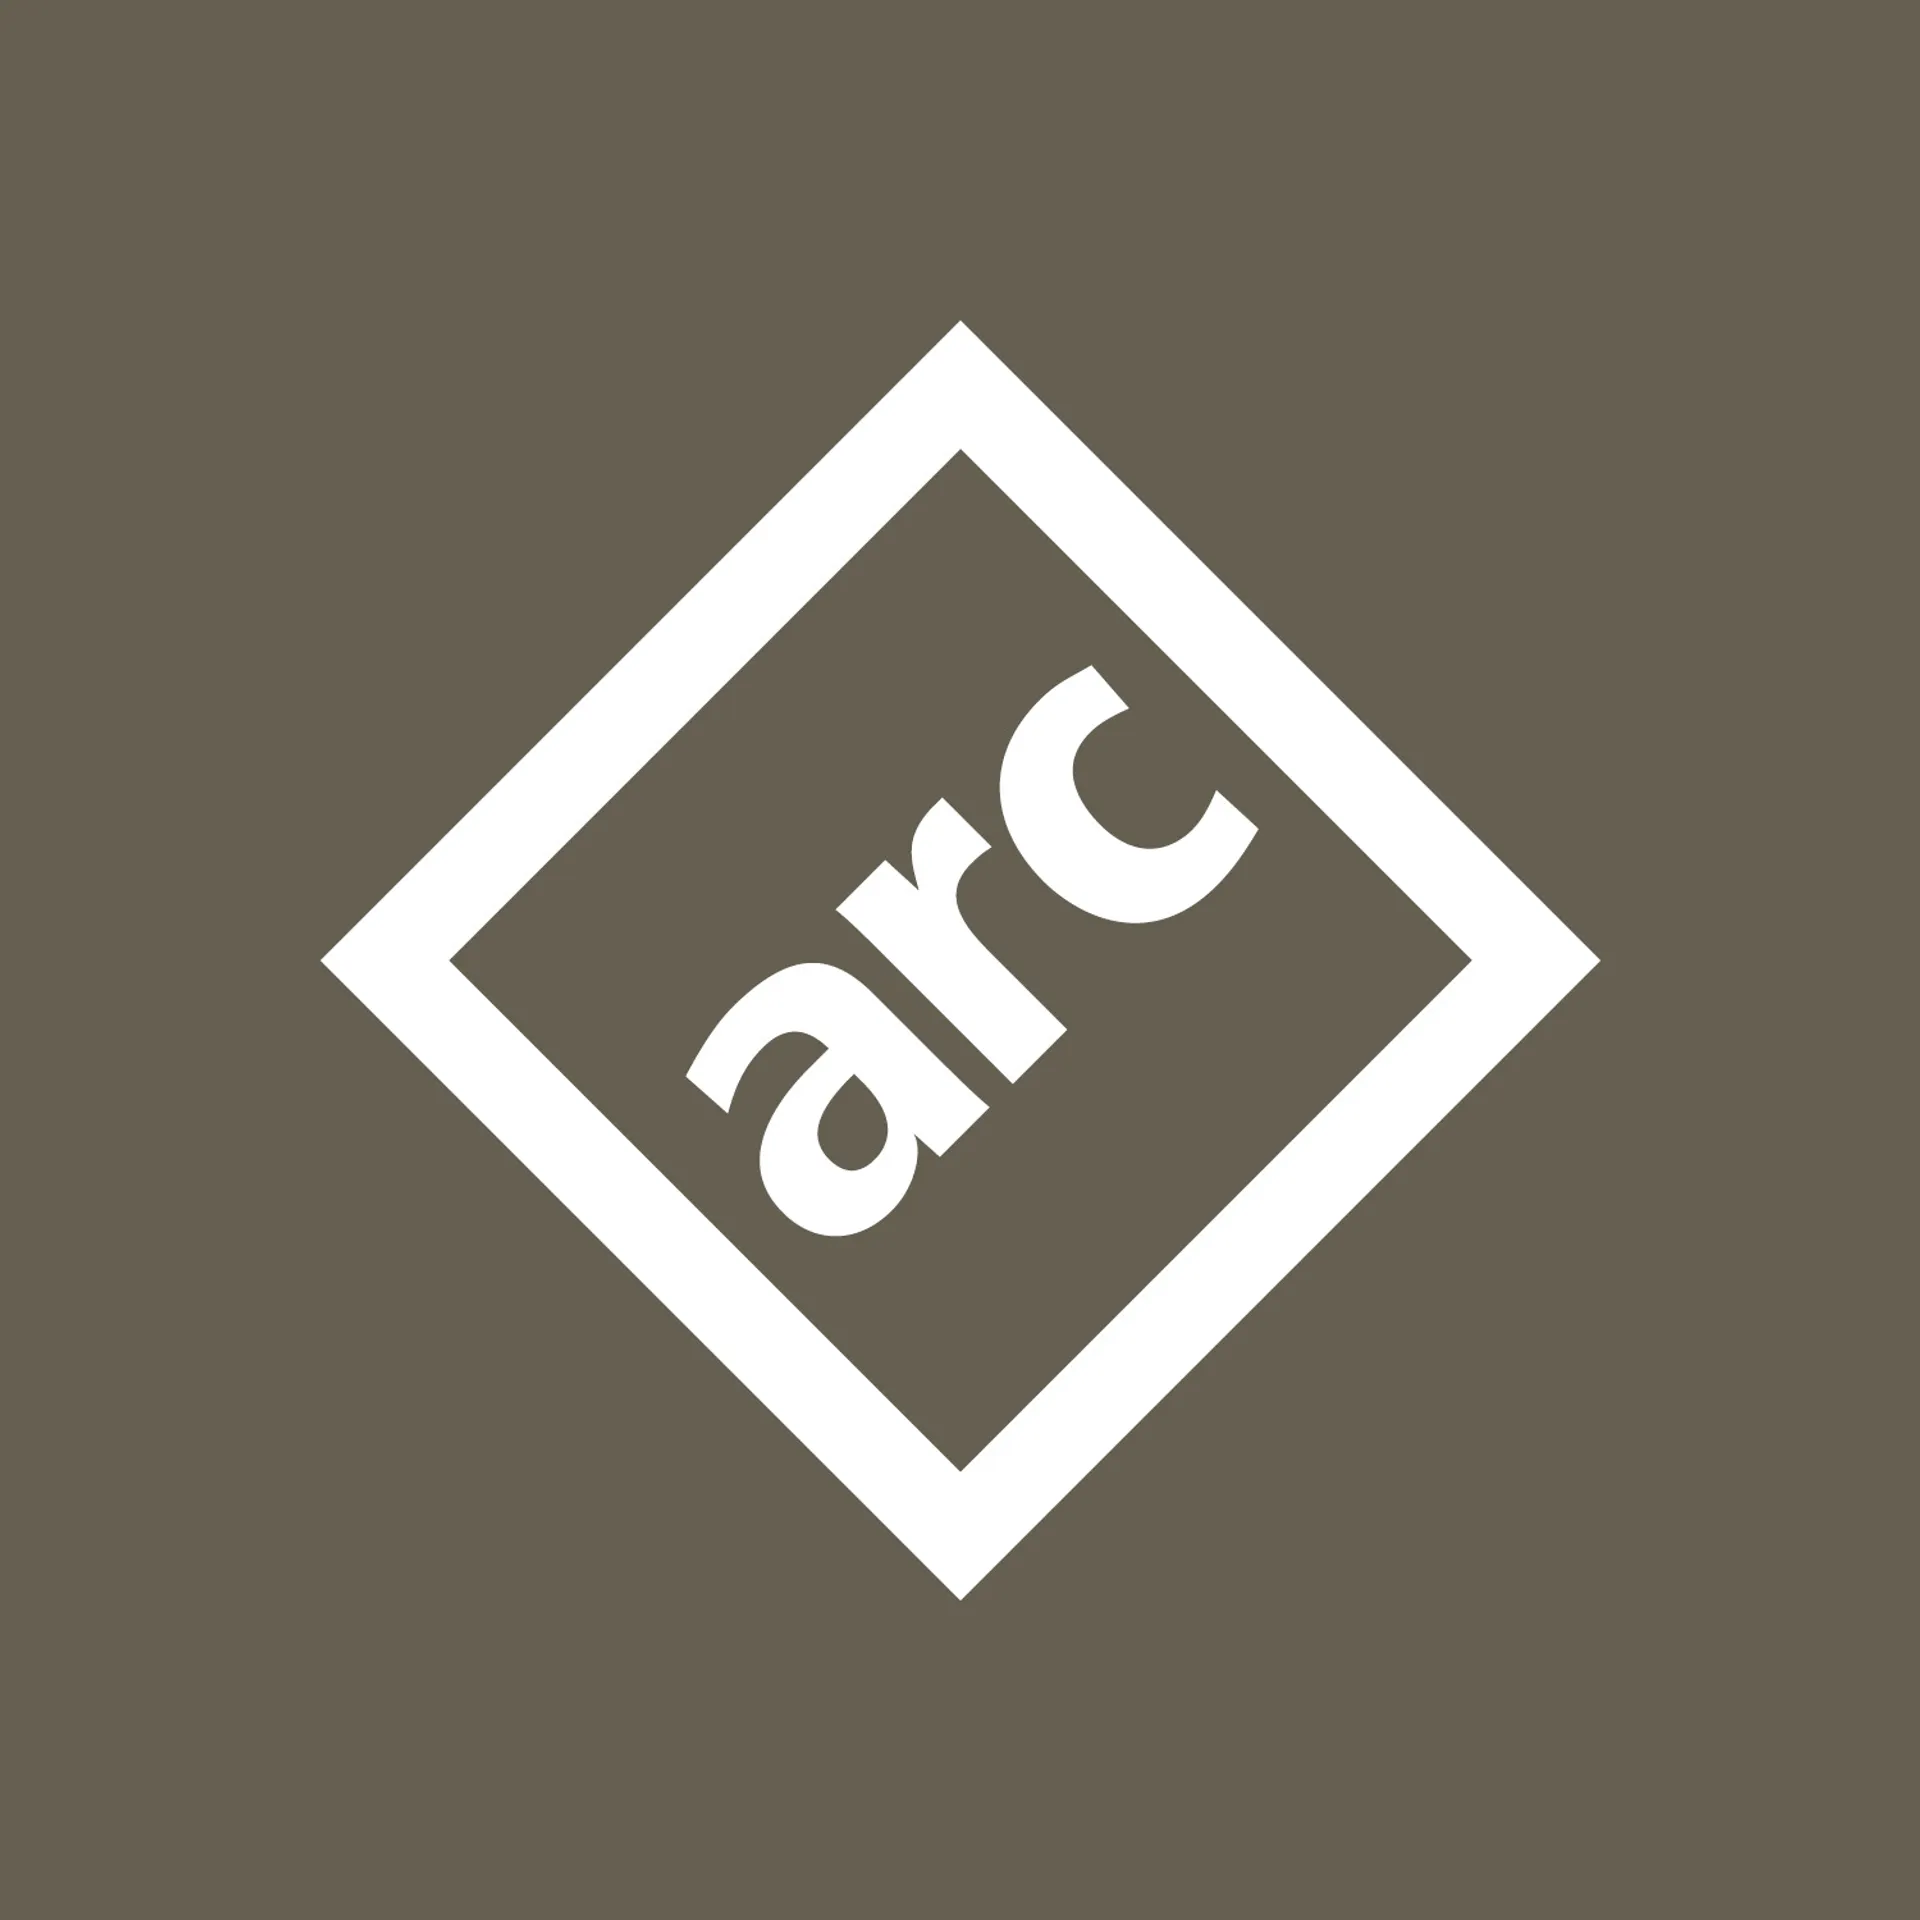 ARC Logo on black background